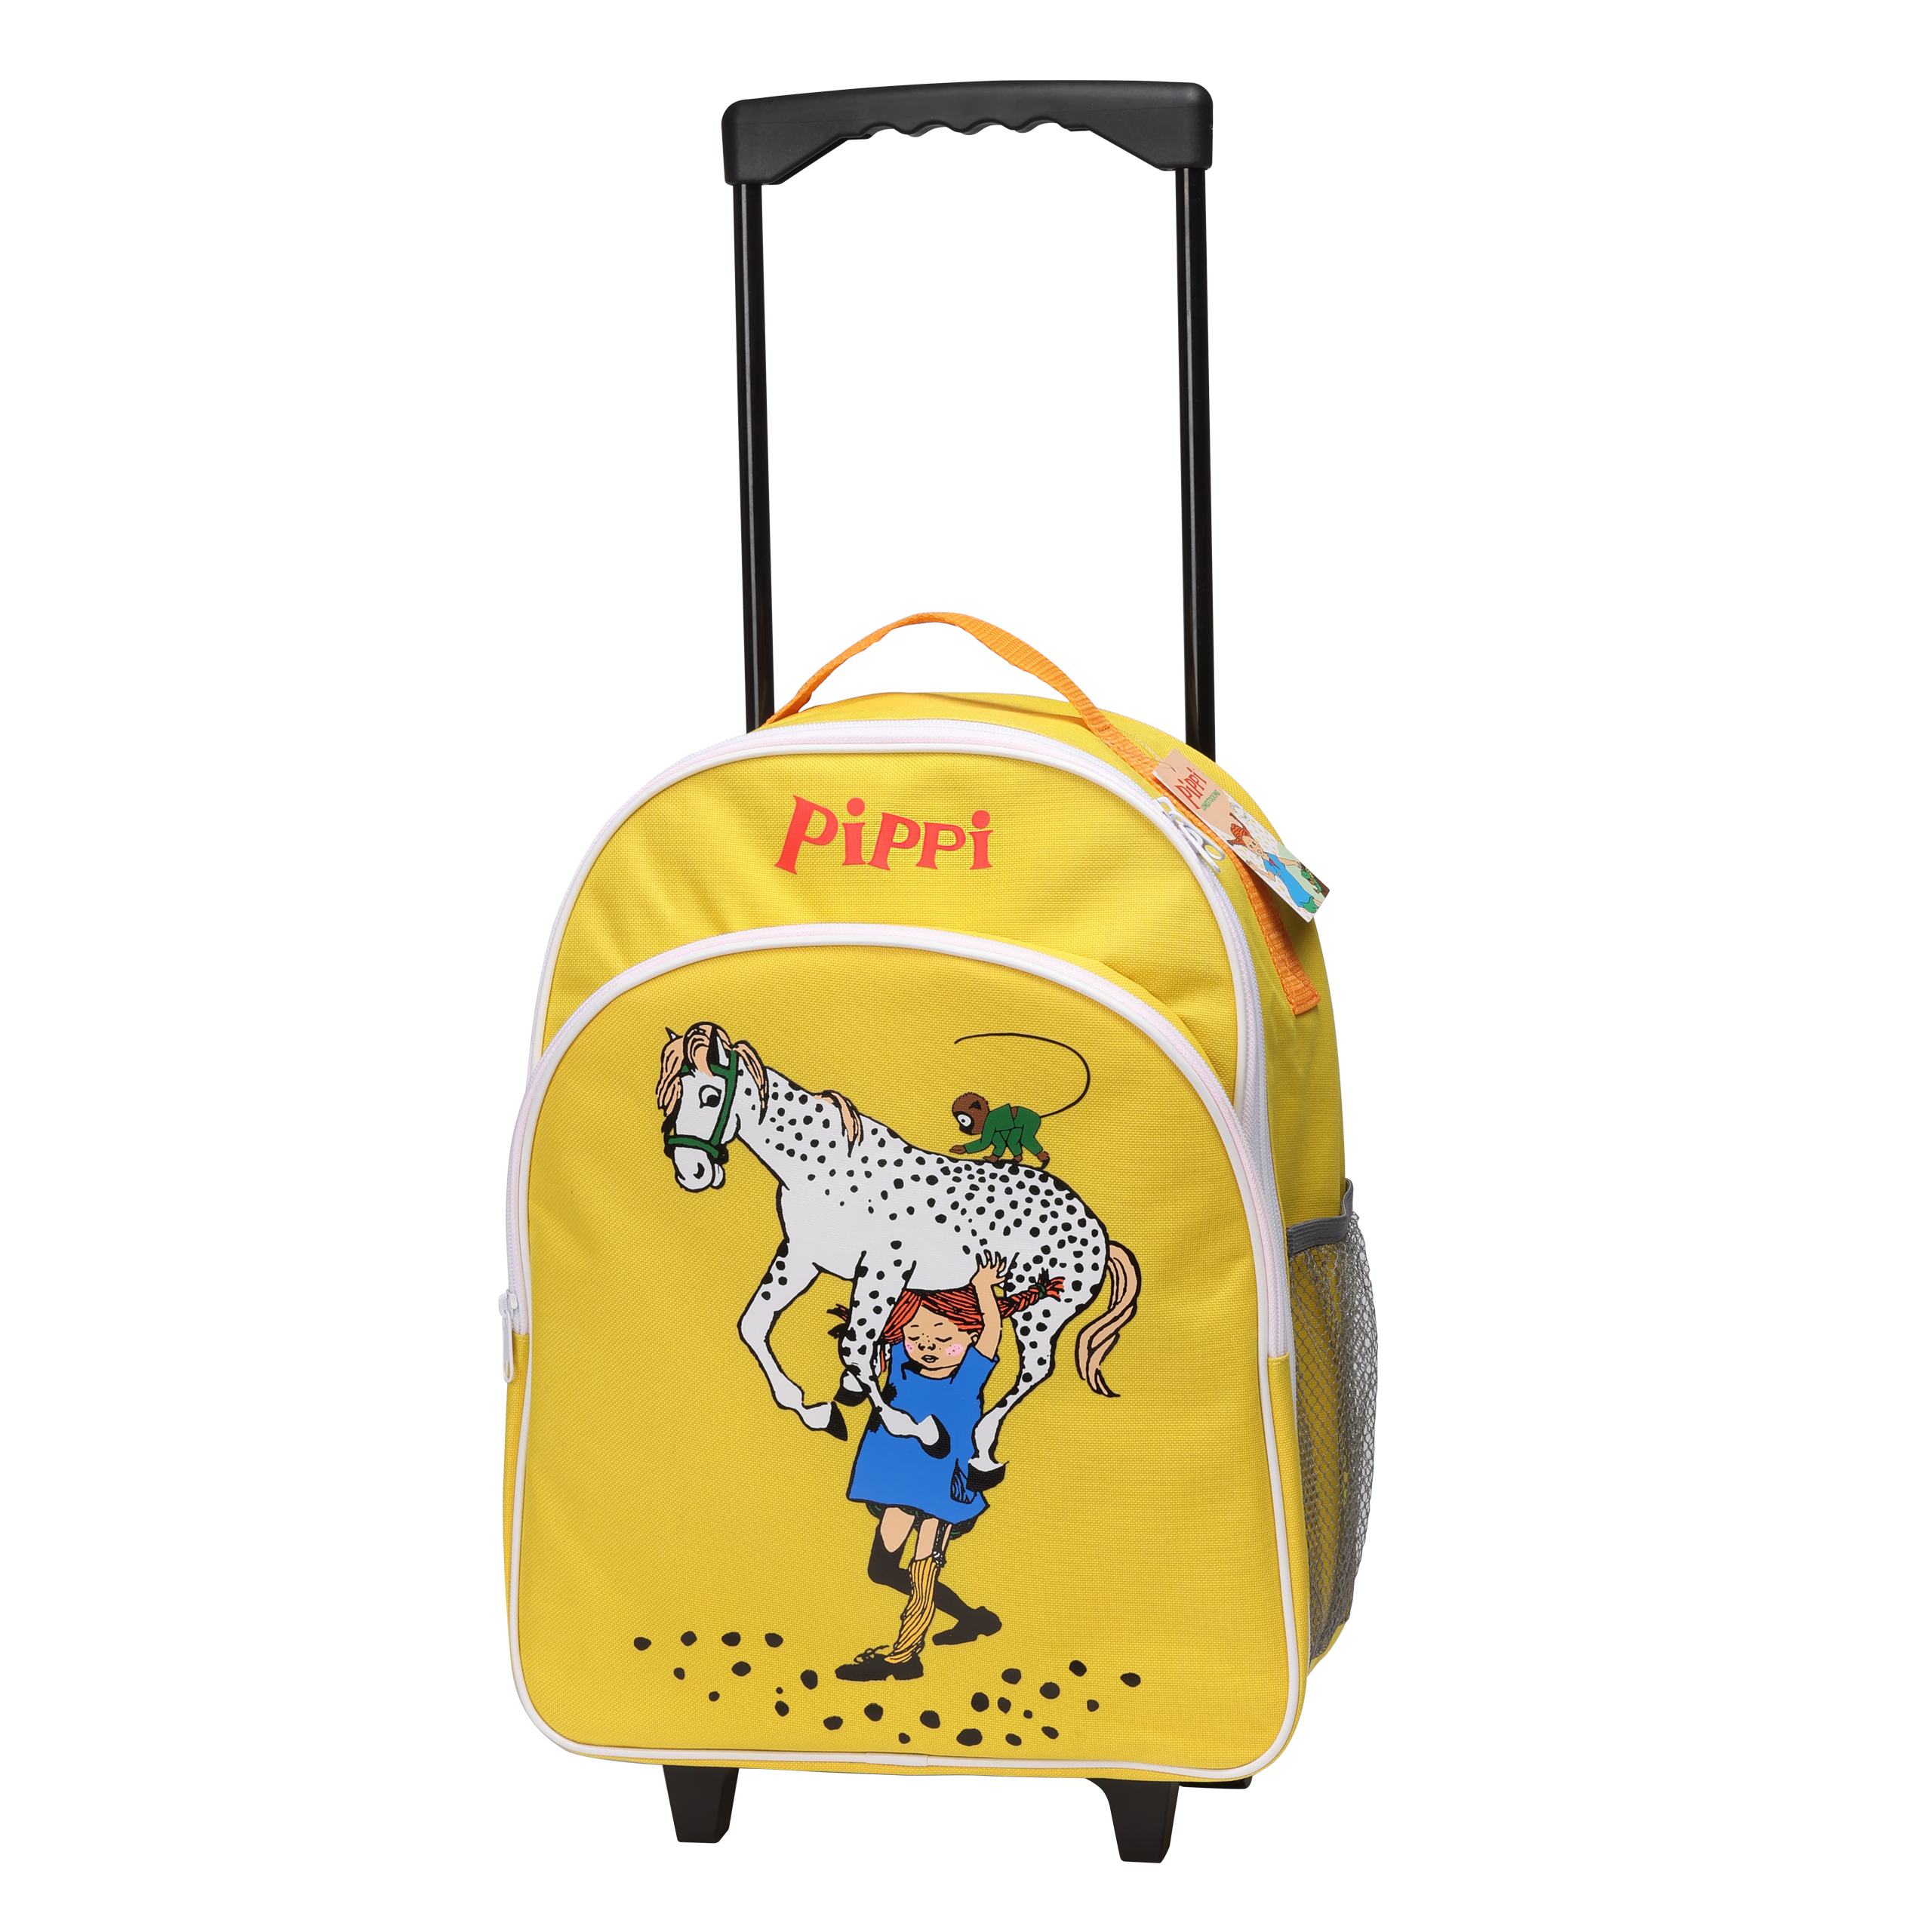 Pippi Longstocking pippi kids bag travel bag yellow